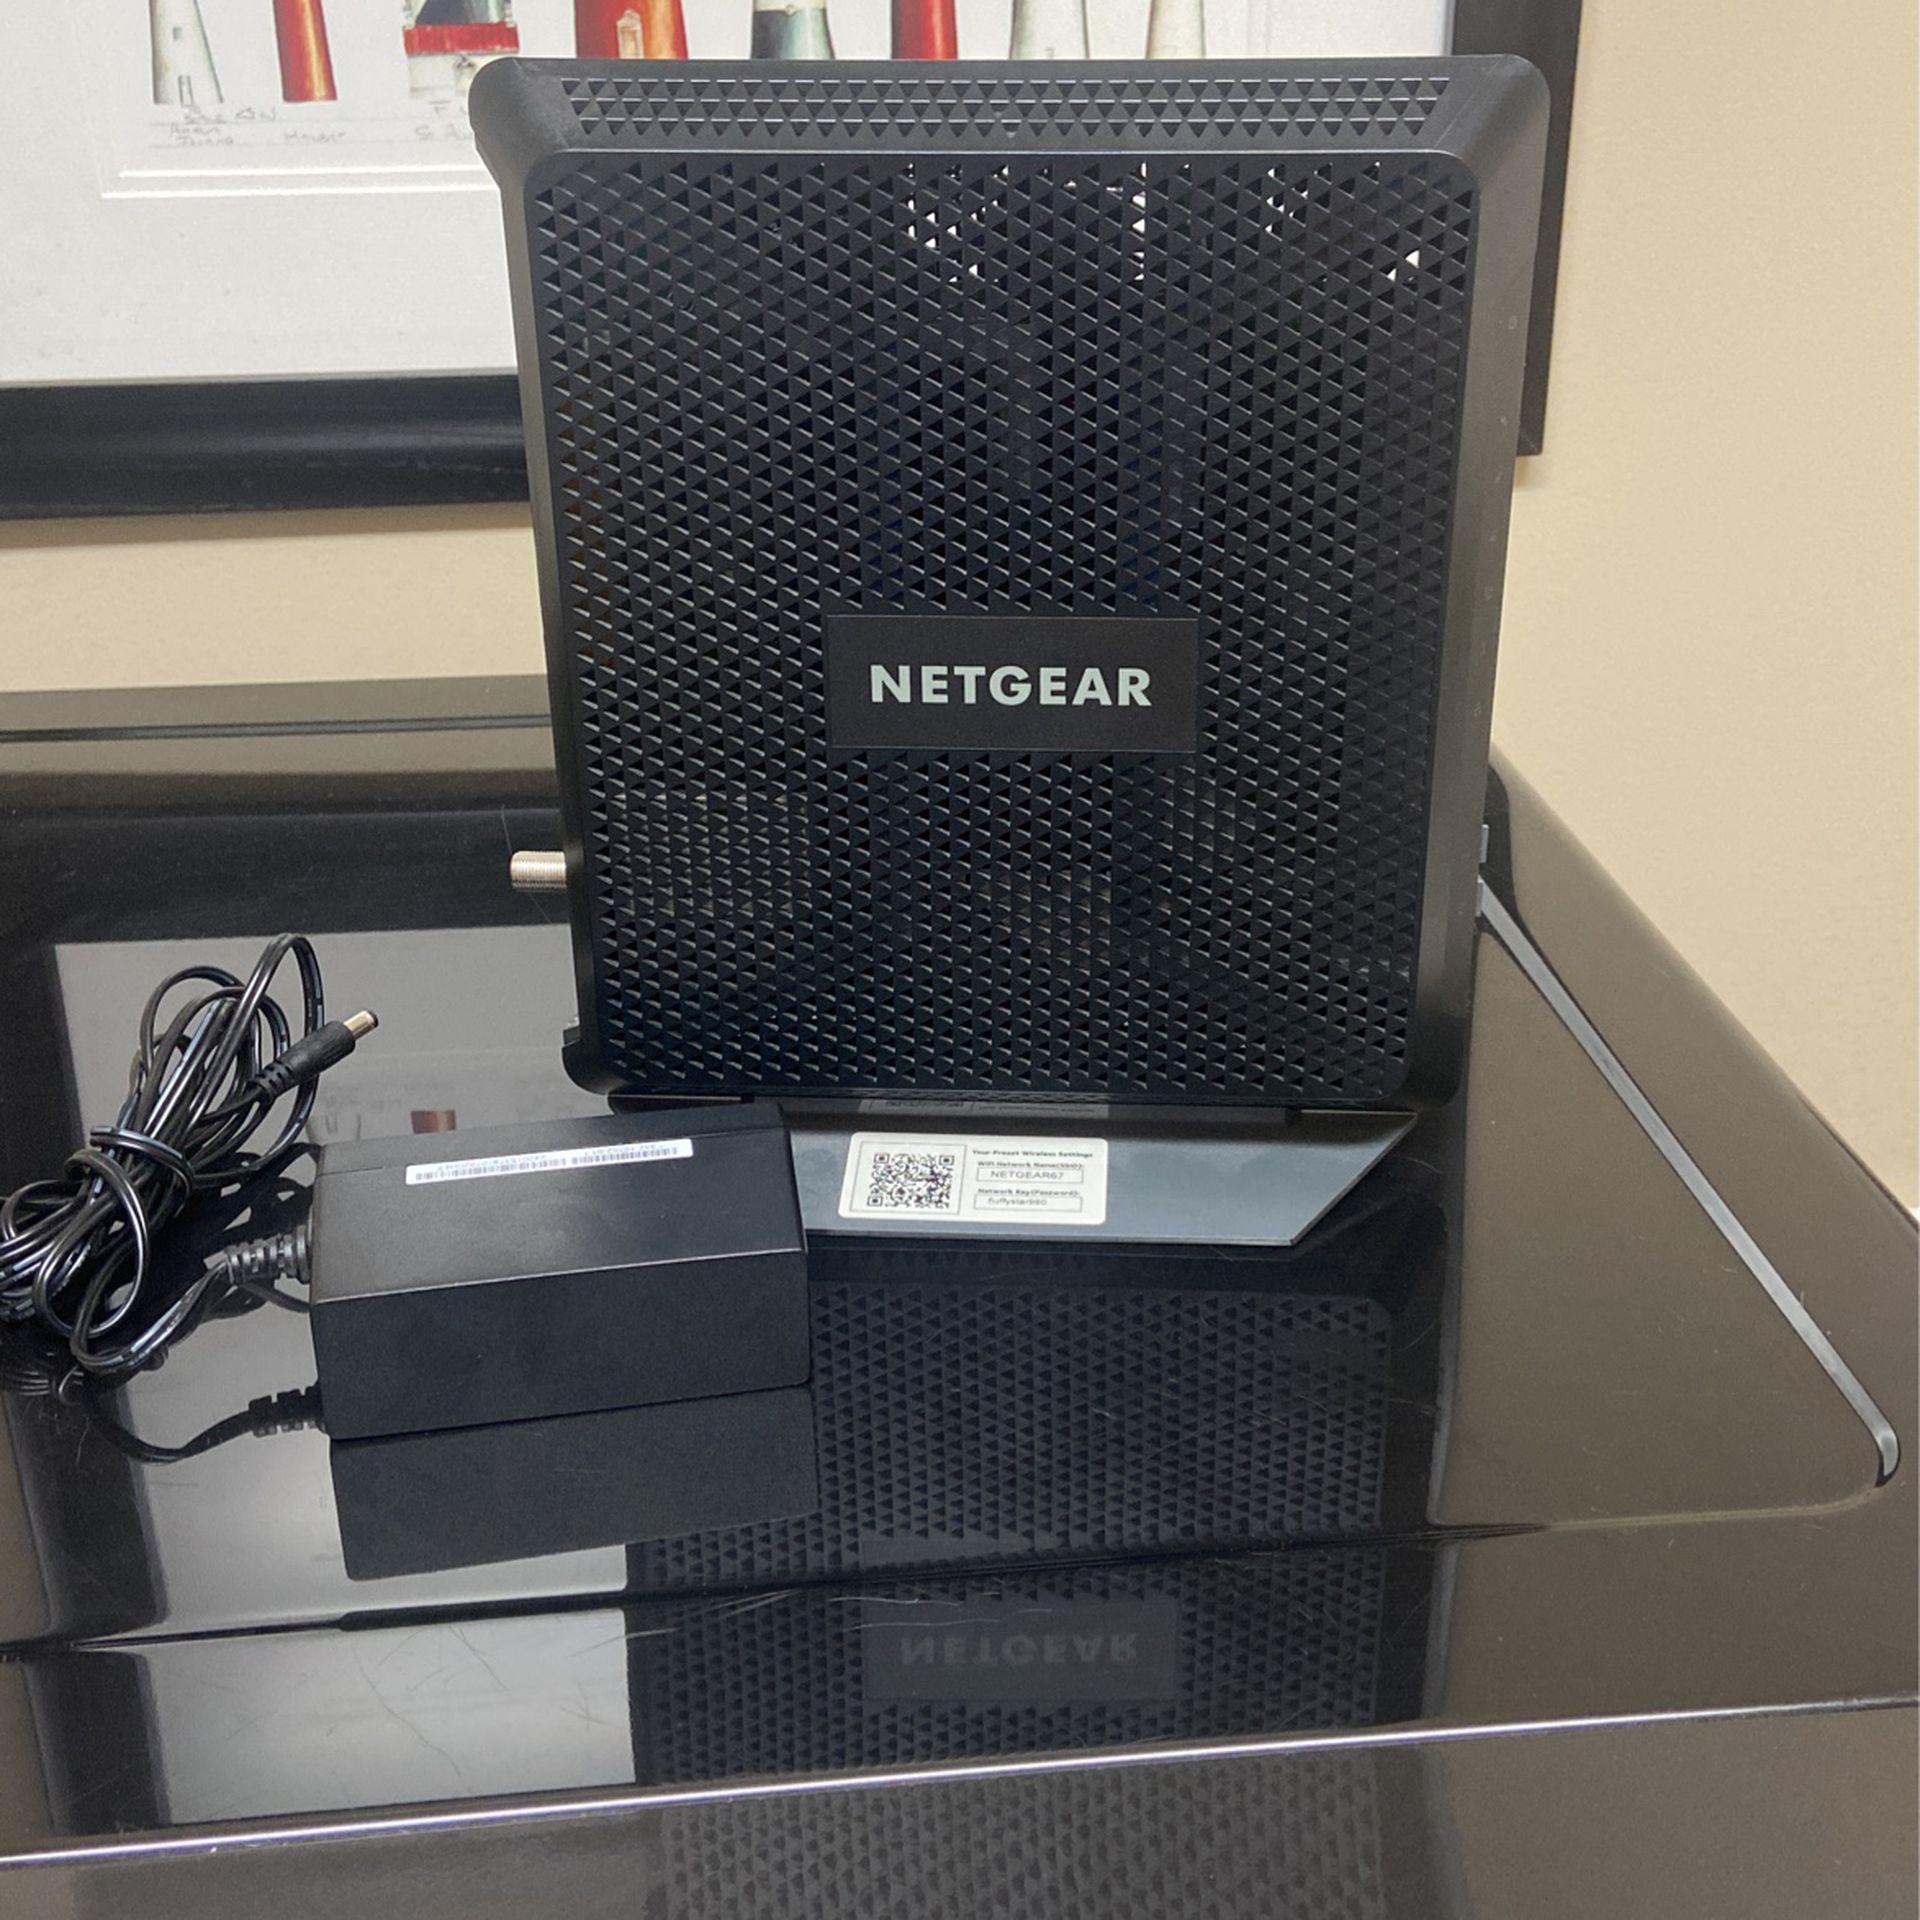 NETGEAR  AC1900 WiFi Cable Modem Router